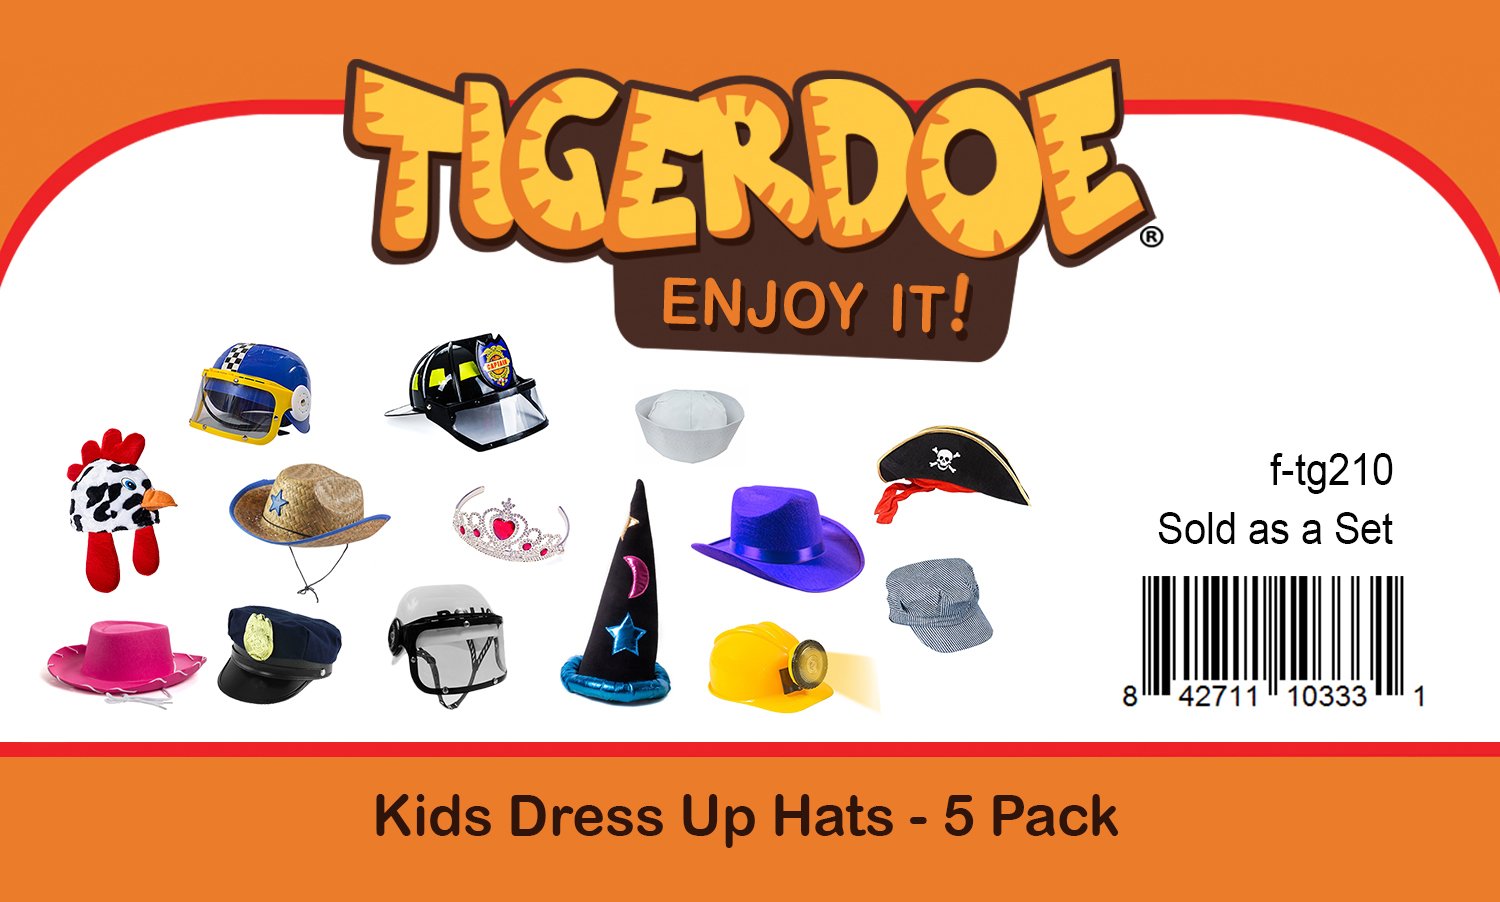 Tigerdoe Dress Up Hats for Kids - Kids Dress Up - Costume Hats (5 Pc Set) Assorted Party Hats